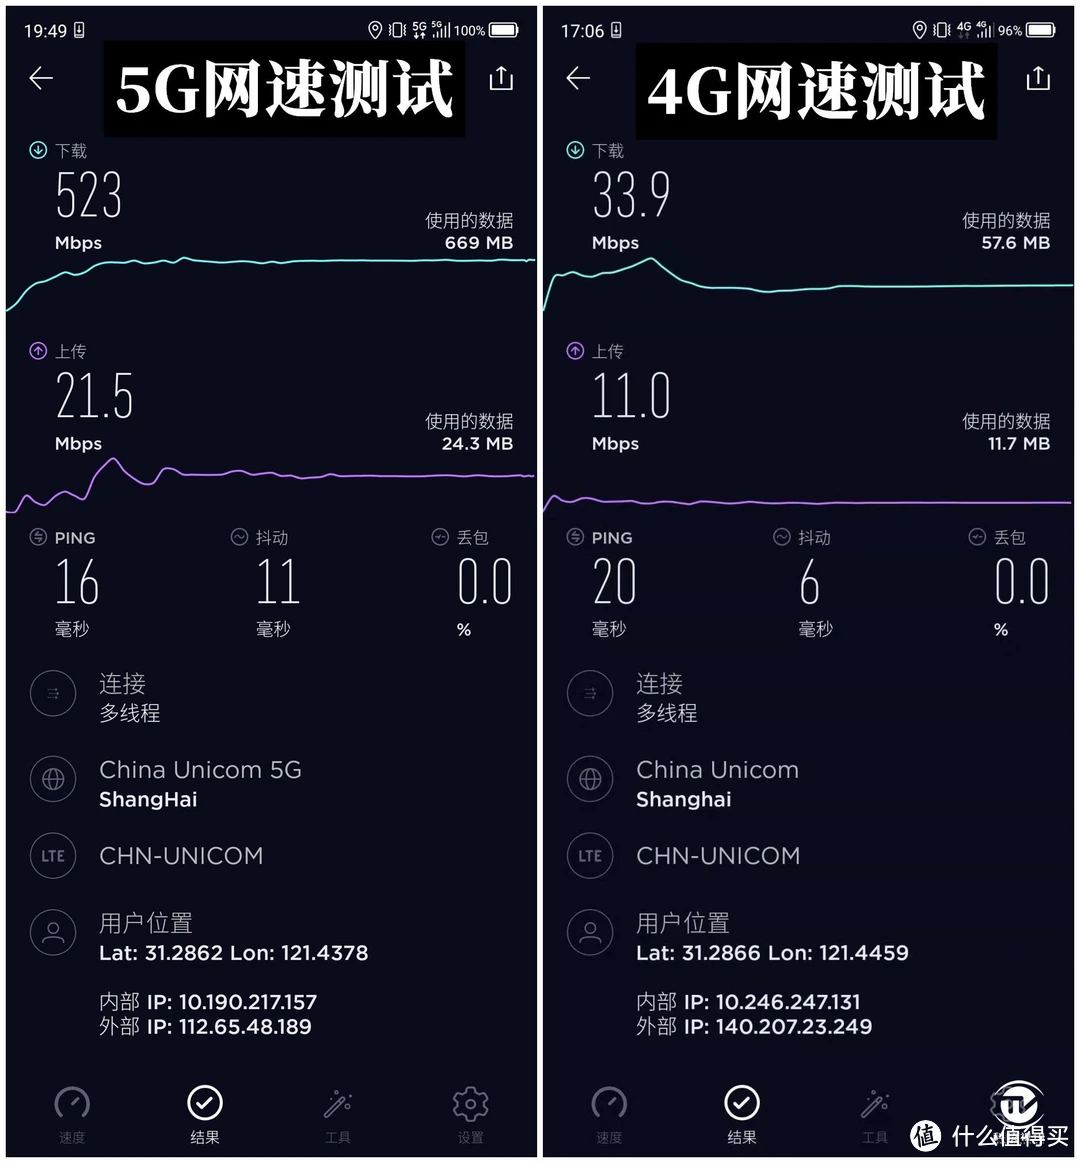 4G 手机和 5G 手机哪个更省电？看完这篇文章你就知道了